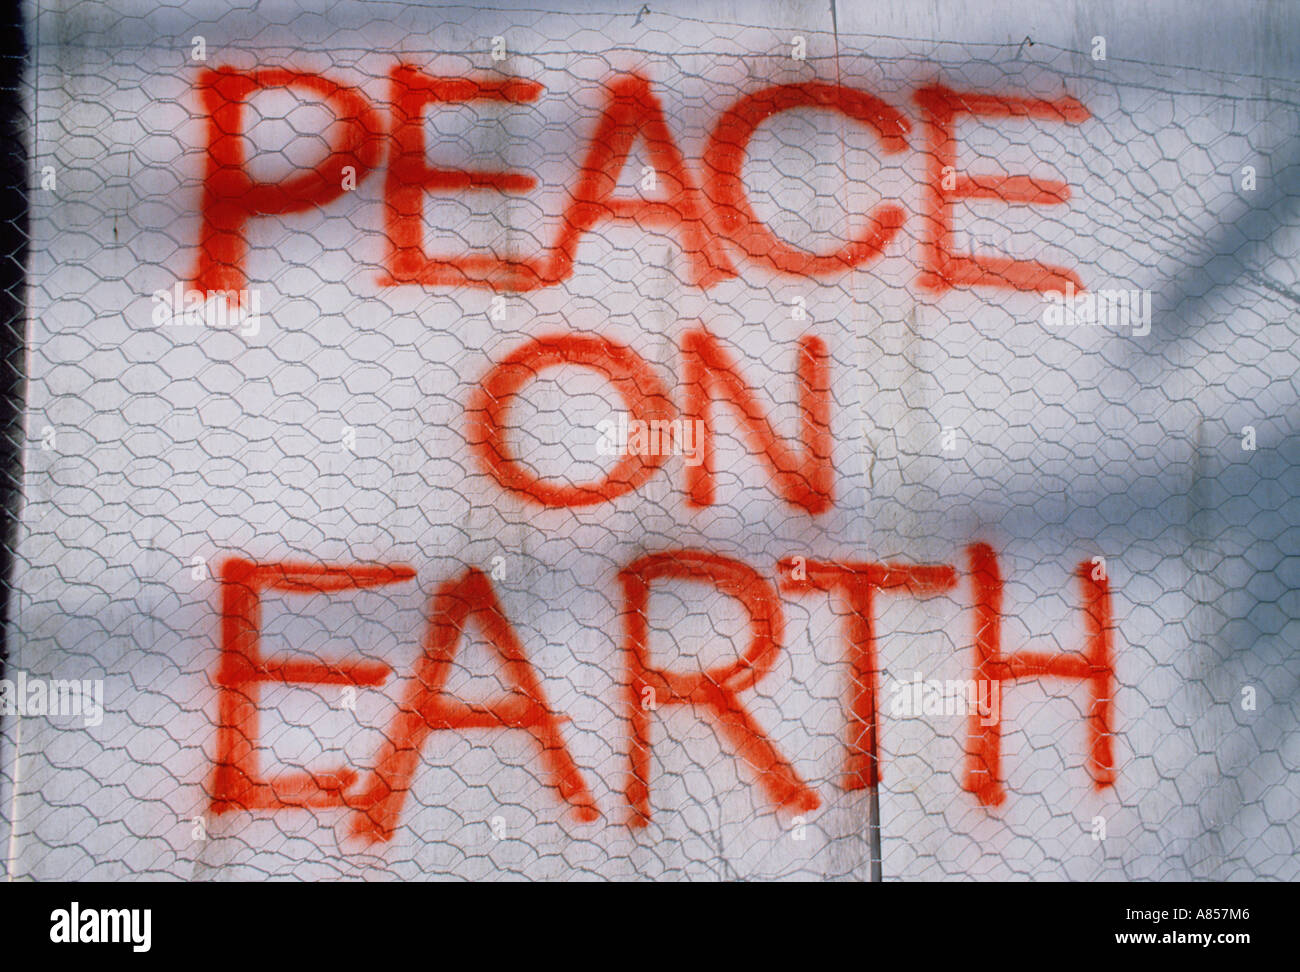 Bildmaterial. Graffiti-Nachricht an der Wand gemalt. "Frieden auf Erden". Stockfoto